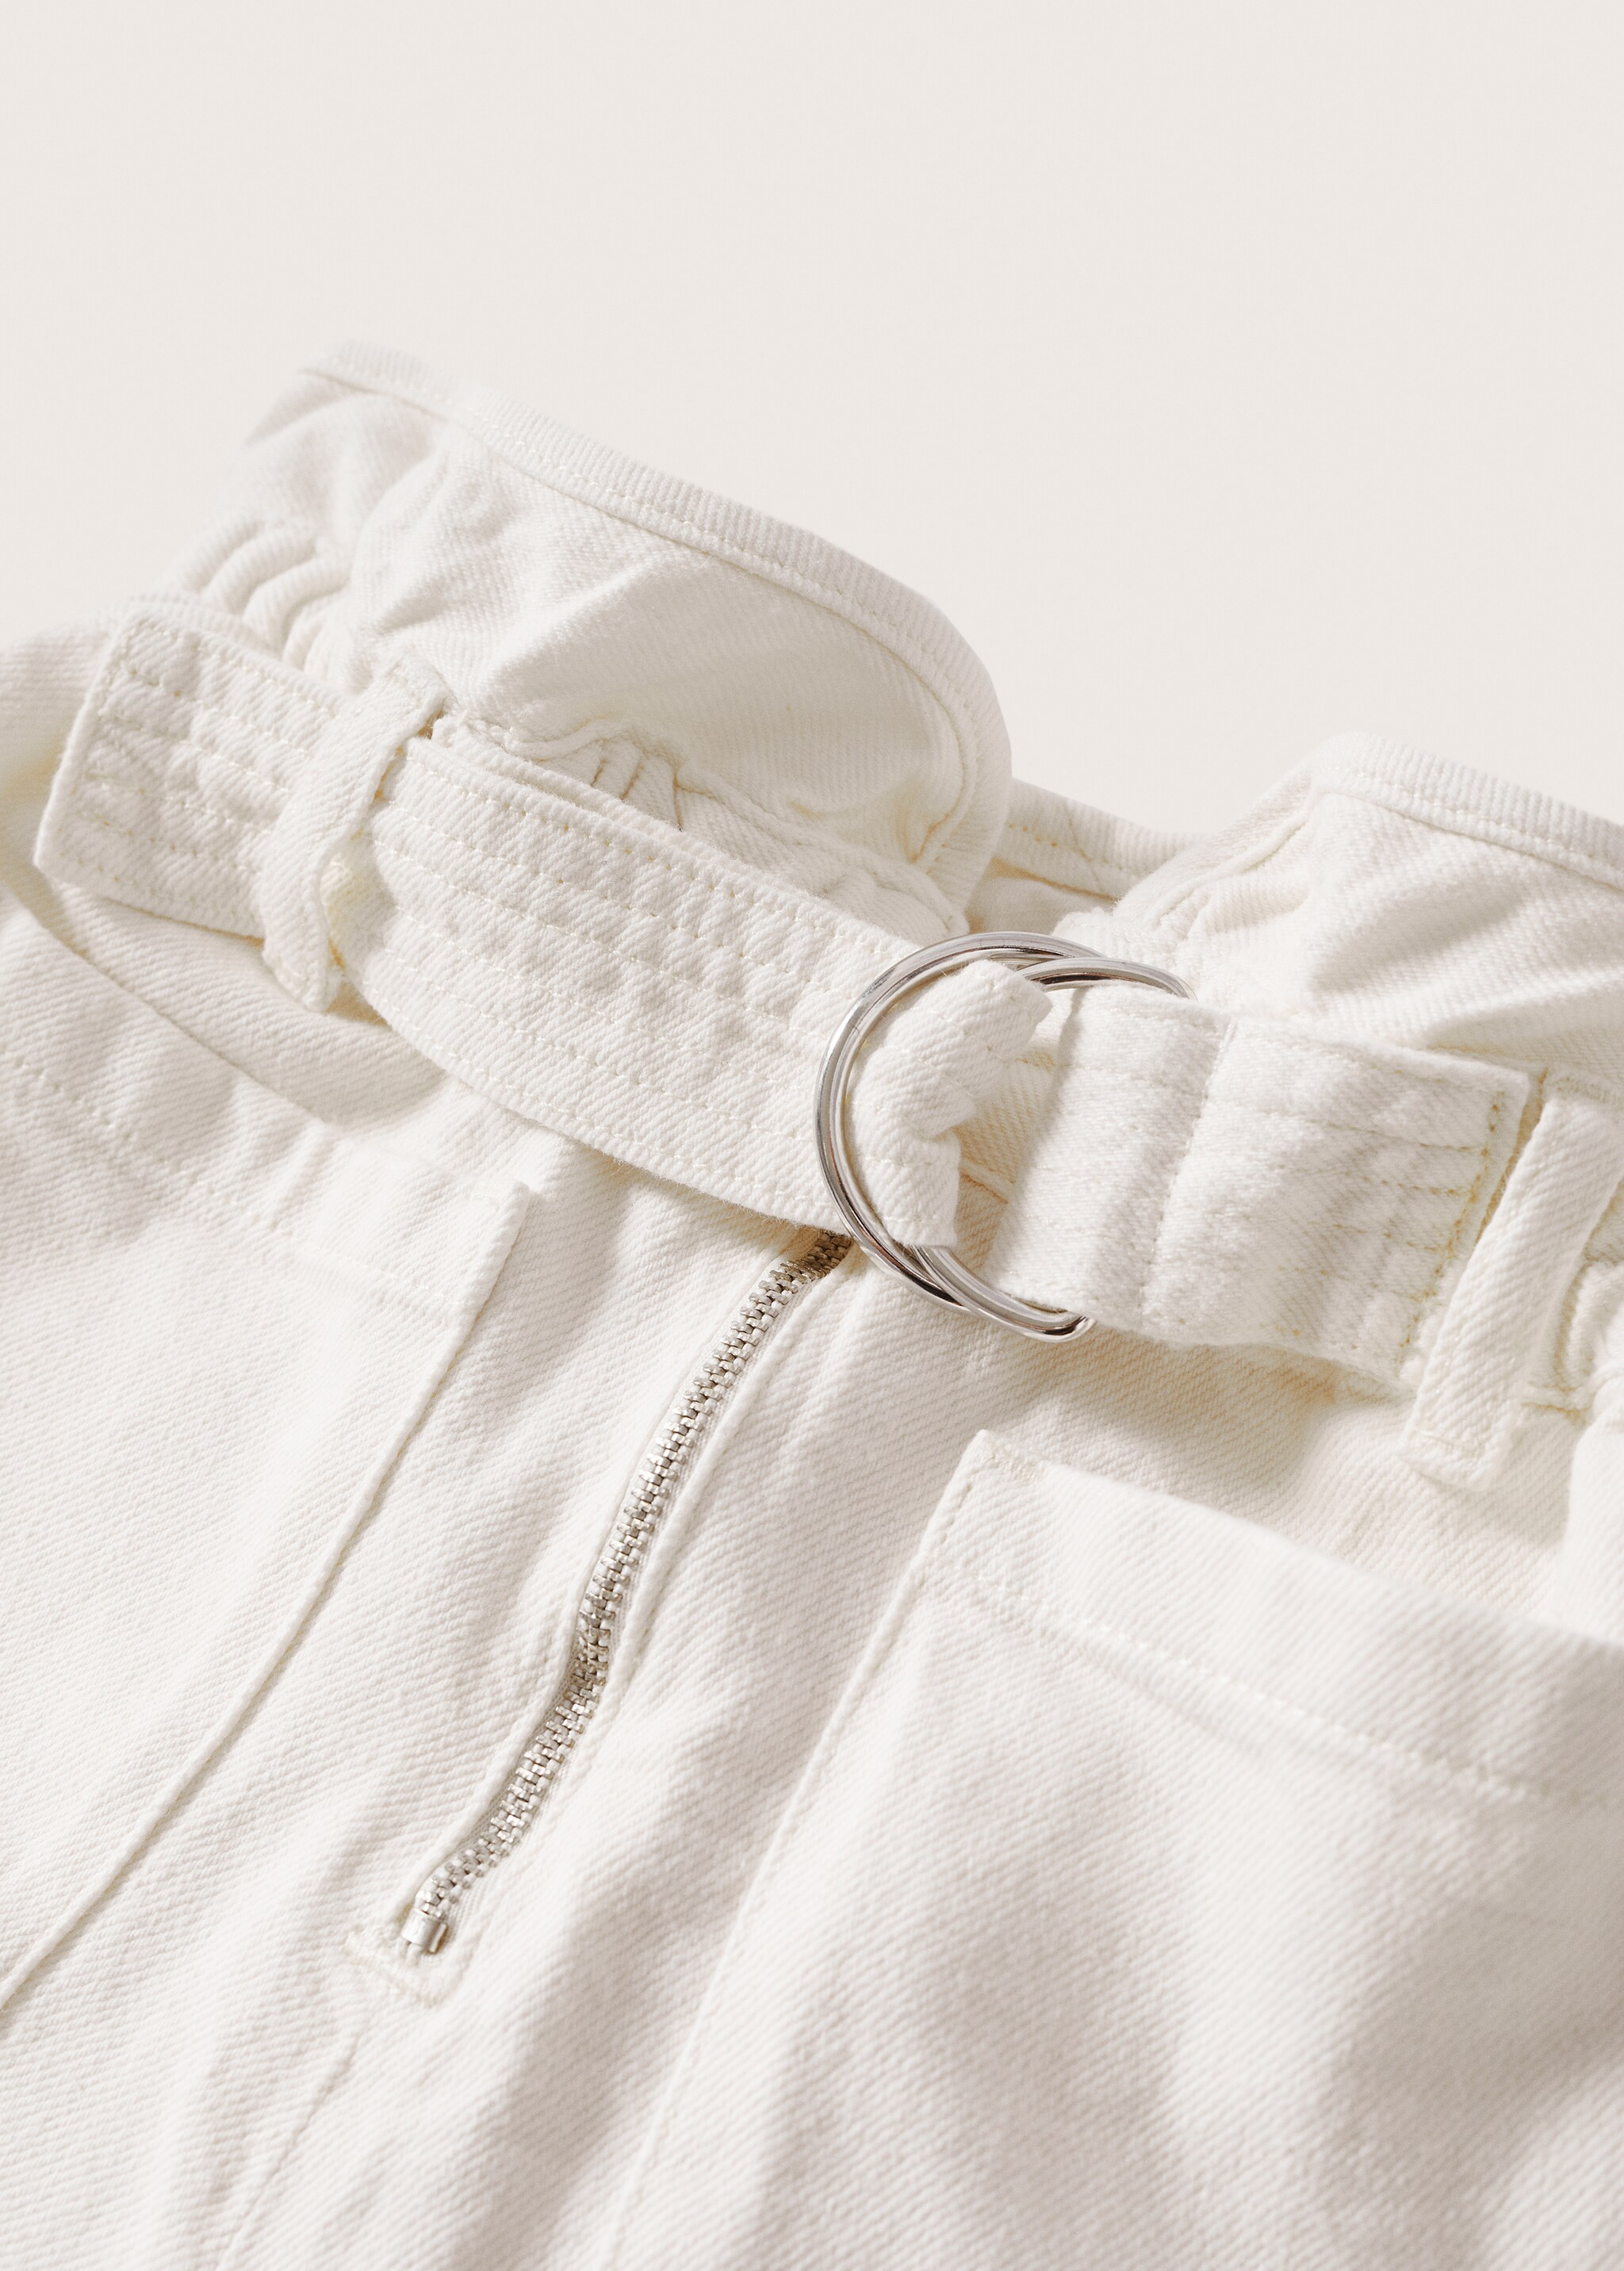 Paperbag denim shorts - Details of the article 8